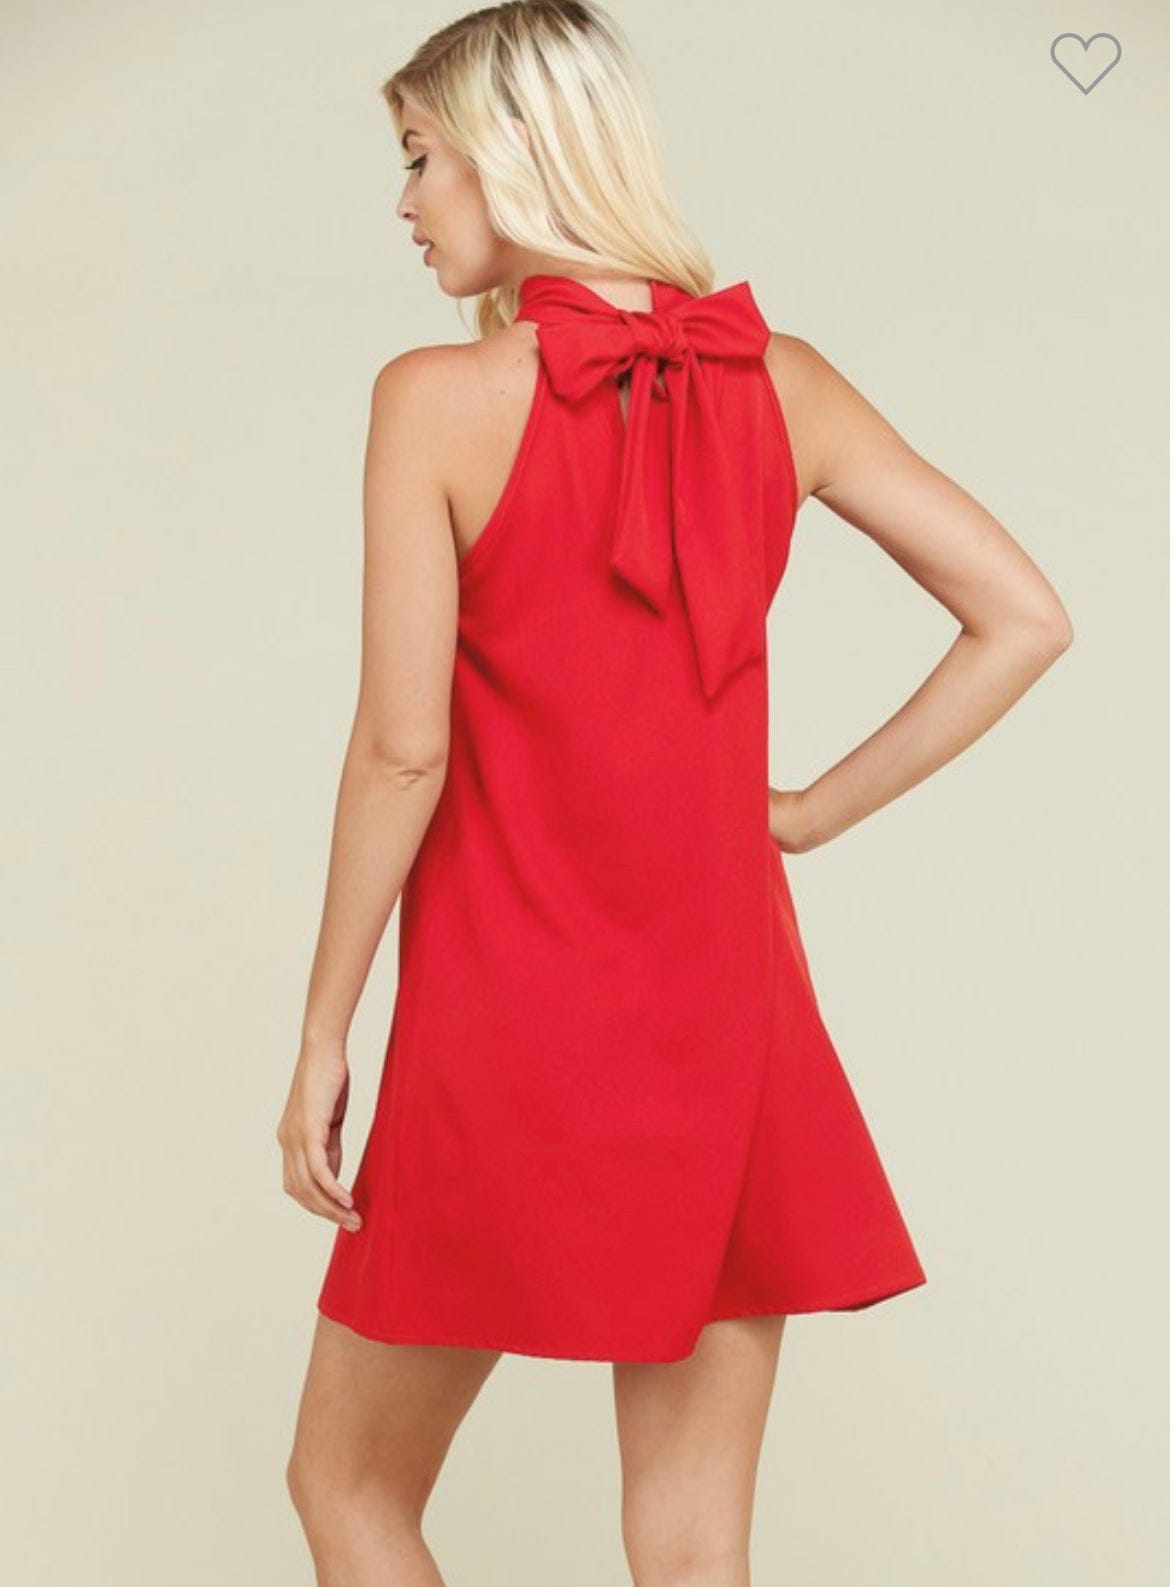 Red Halter top dress